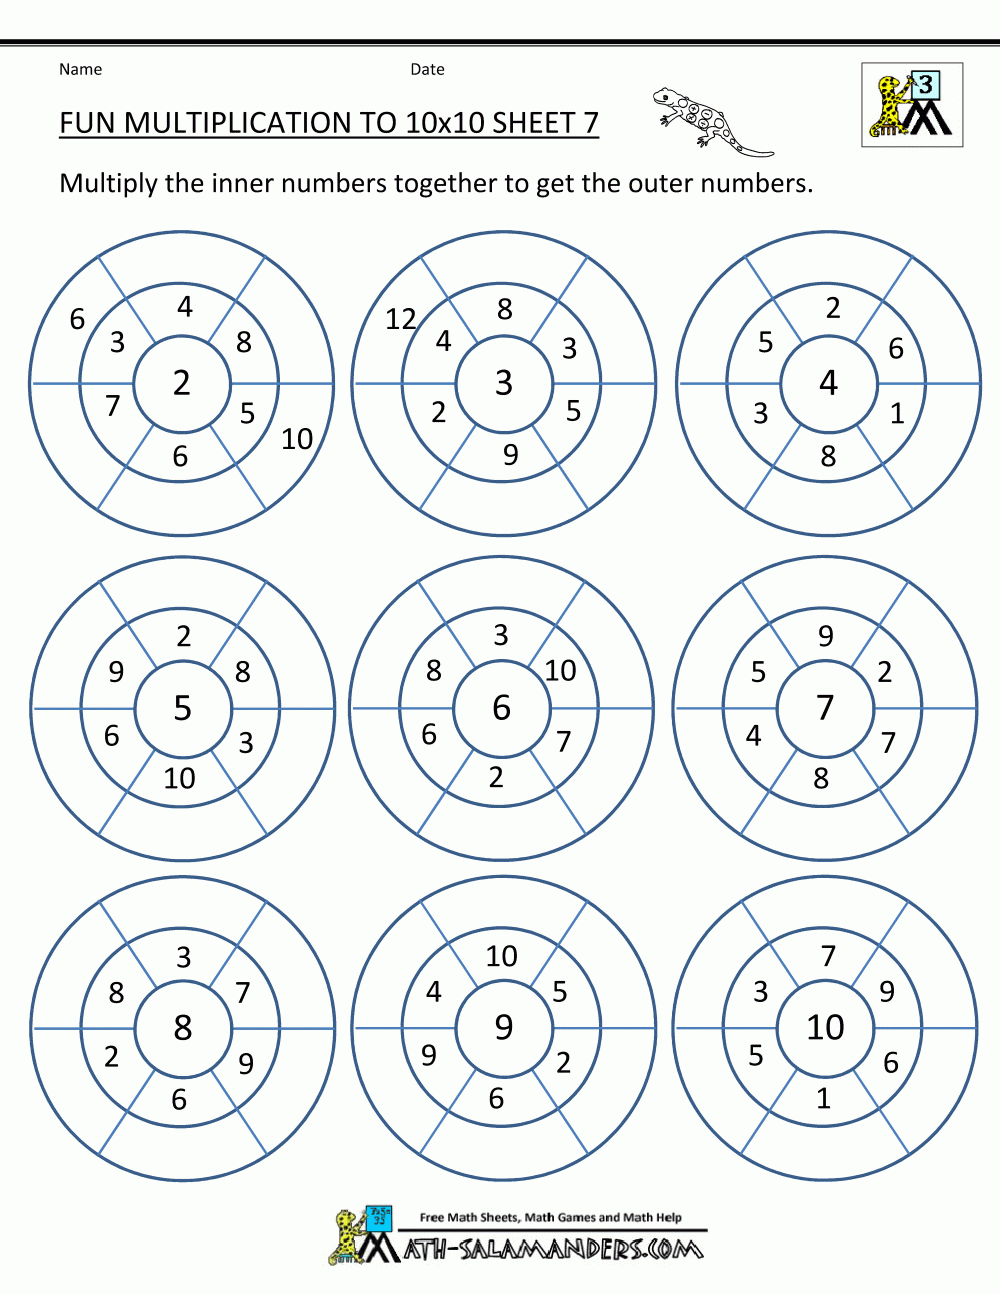 Printable-Multiplication-Sheets-Fun-Multiplication-To-10X10